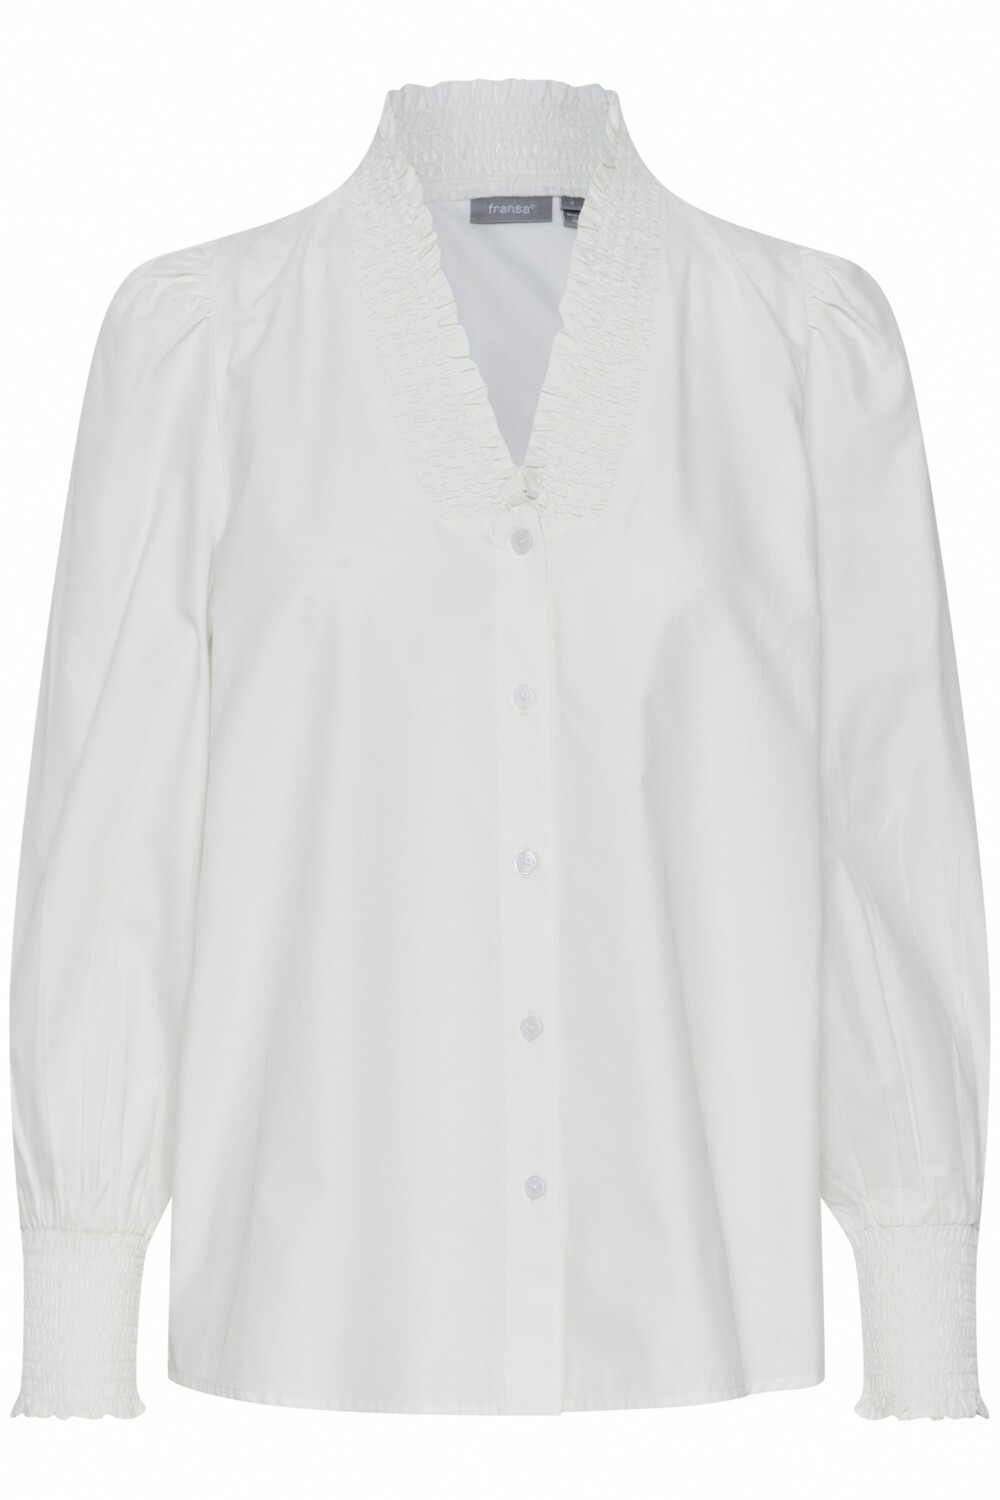 Fransa FRPOPS Shirt, Blanc de Blanc